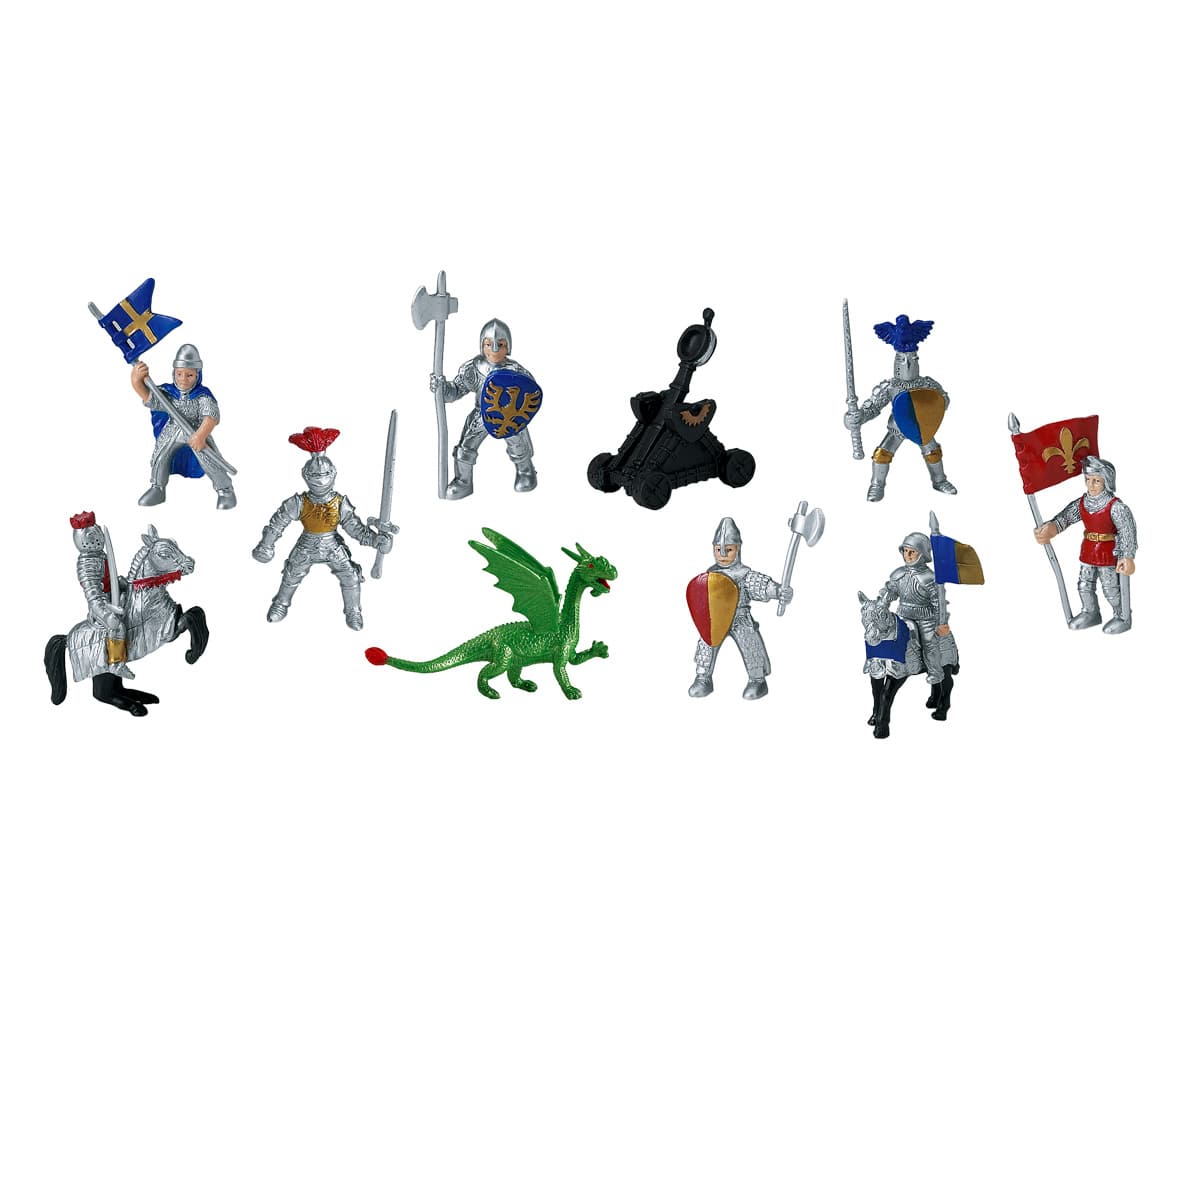 Knights and Dragons 2 Toob Mini Figures Safari Ltd toys Educational 